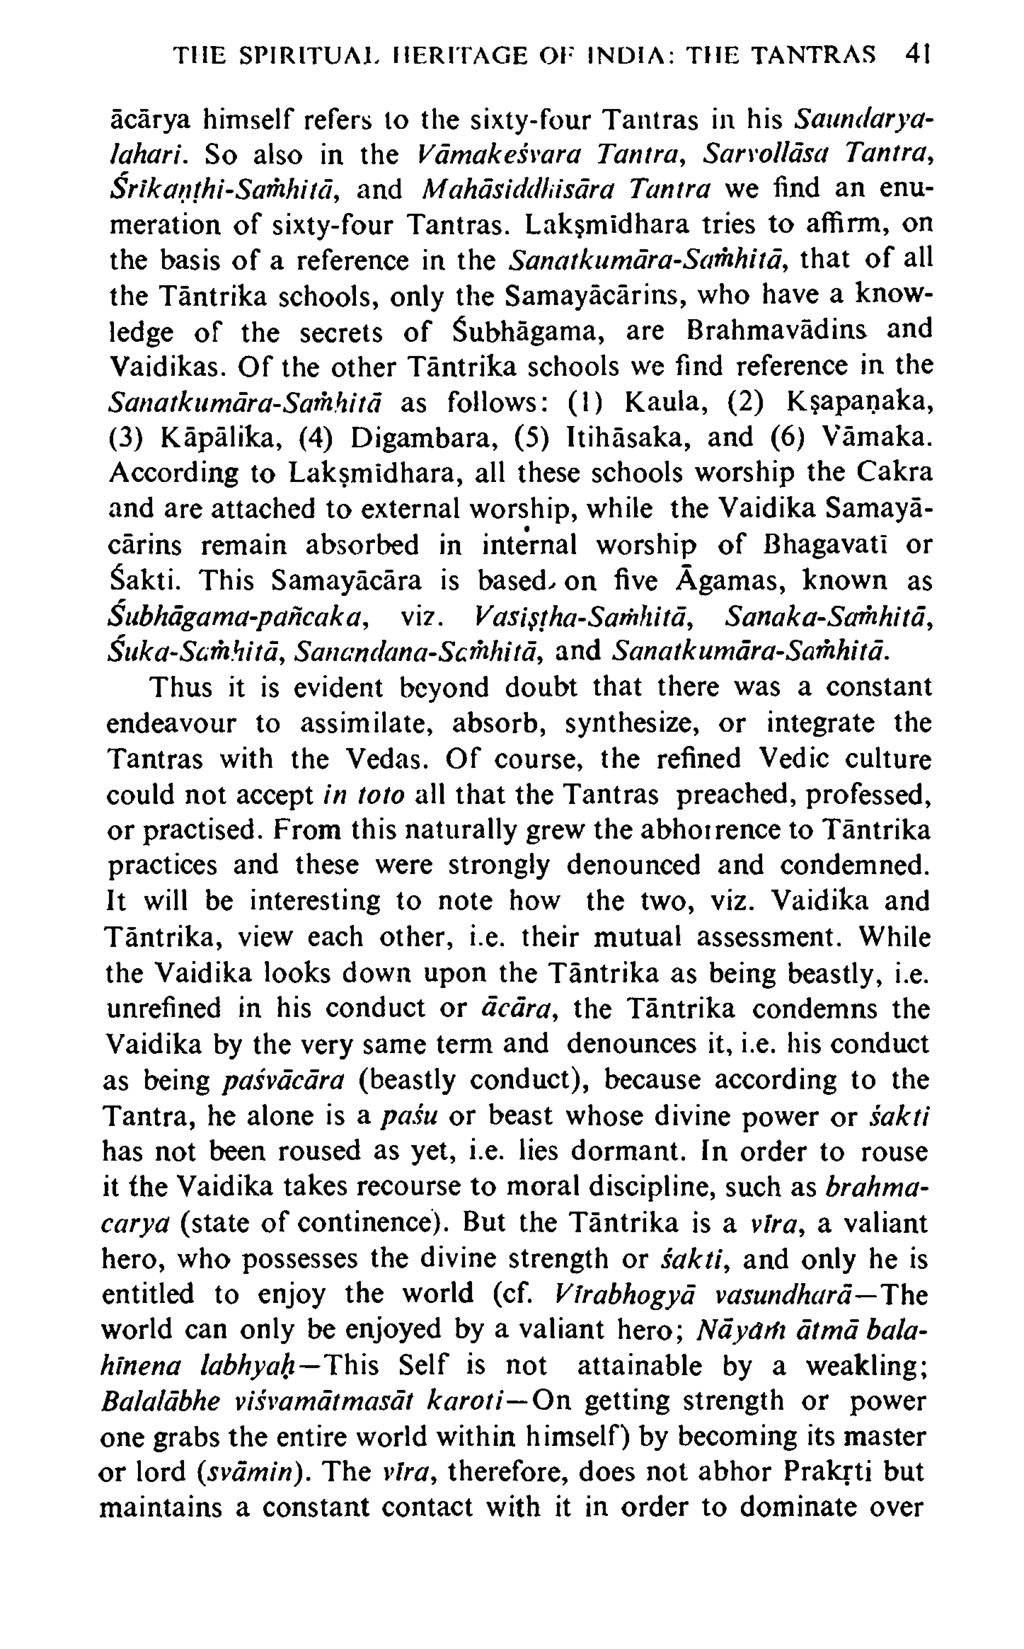 THE SPIRITUAL HERITAGE OF INDIA: THE TANTRAS 41 acarya himself refers lo the sixty-four Tantras in his Saundaryalahari.